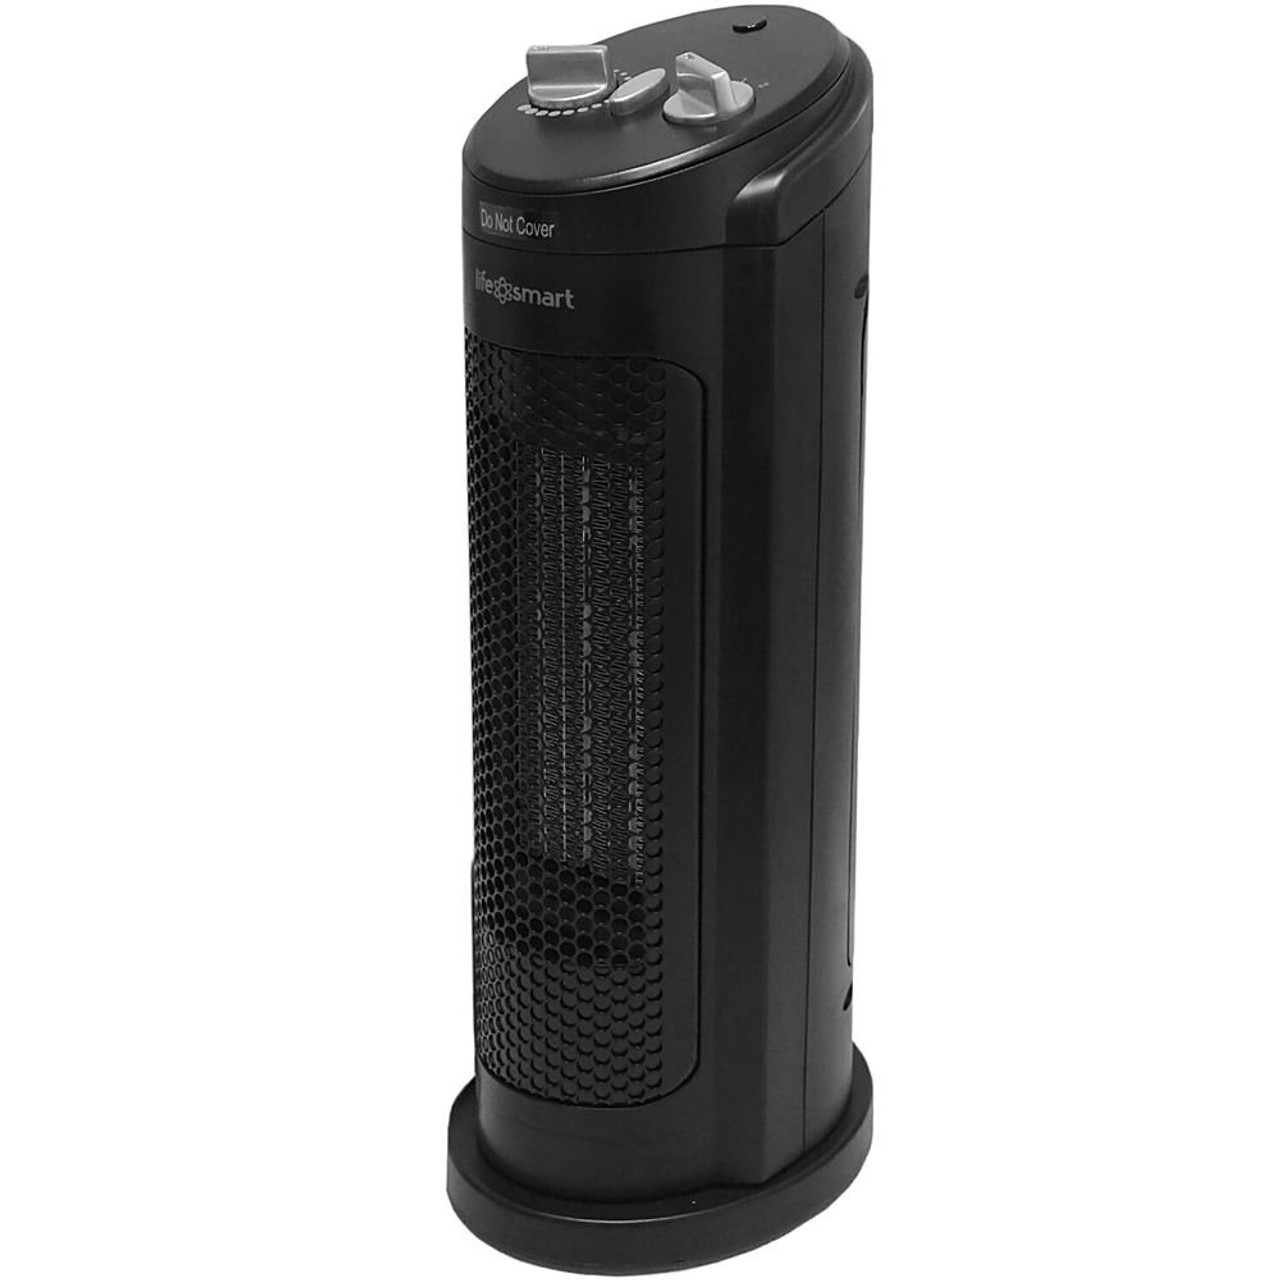 Lifesmart - 1500W 16 Inch Tower PTC Heater with Oscillation - Black